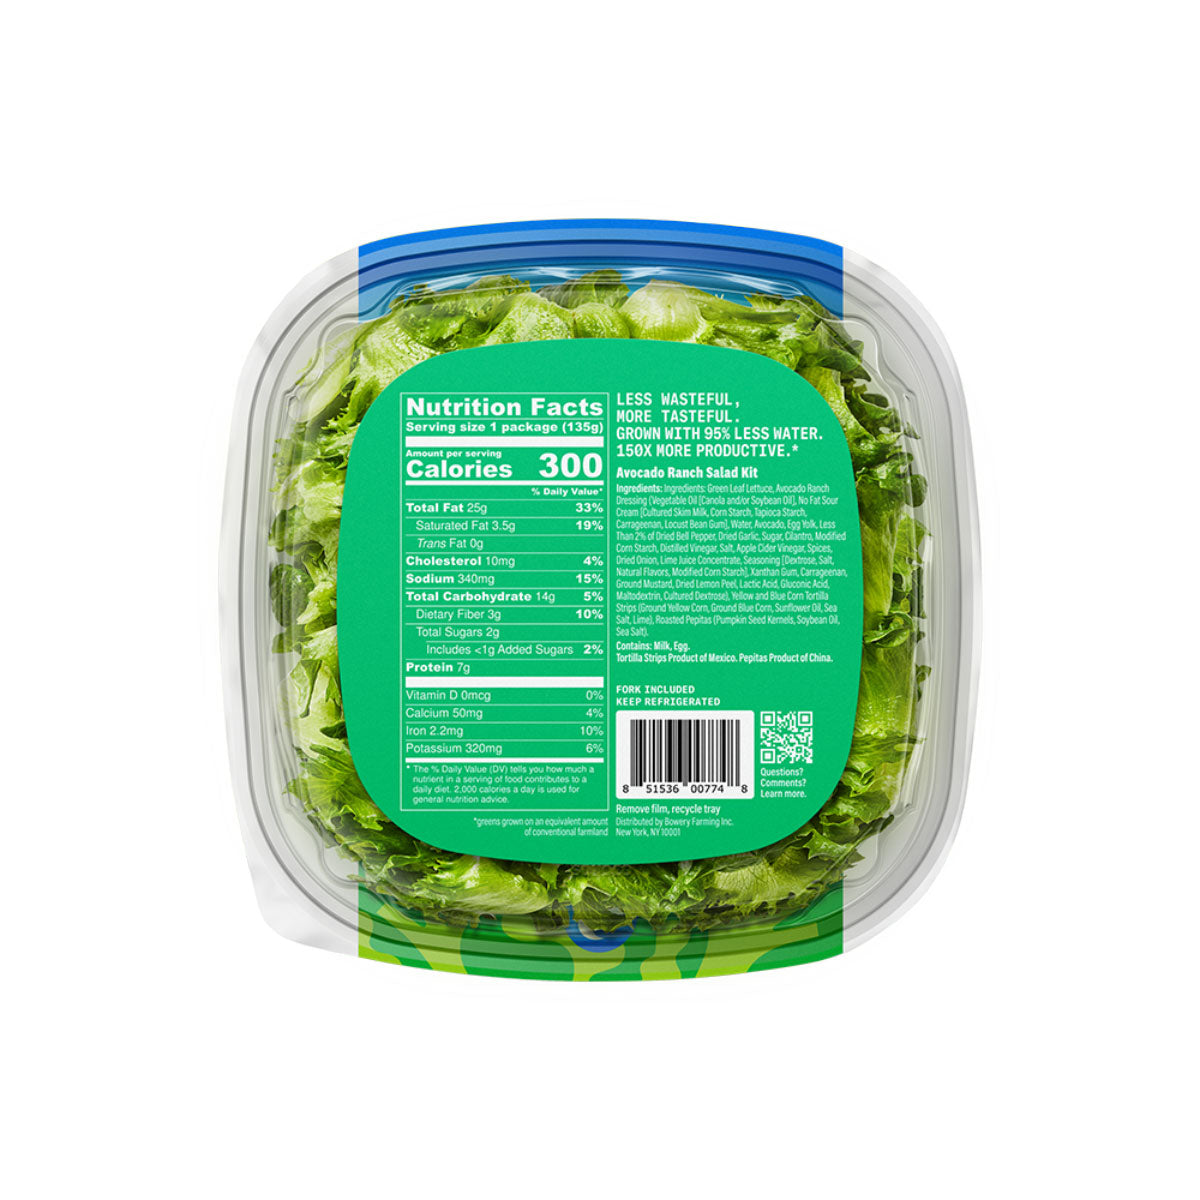 Bowery Avocado Ranch Salad Kit 5.25 oz Bag